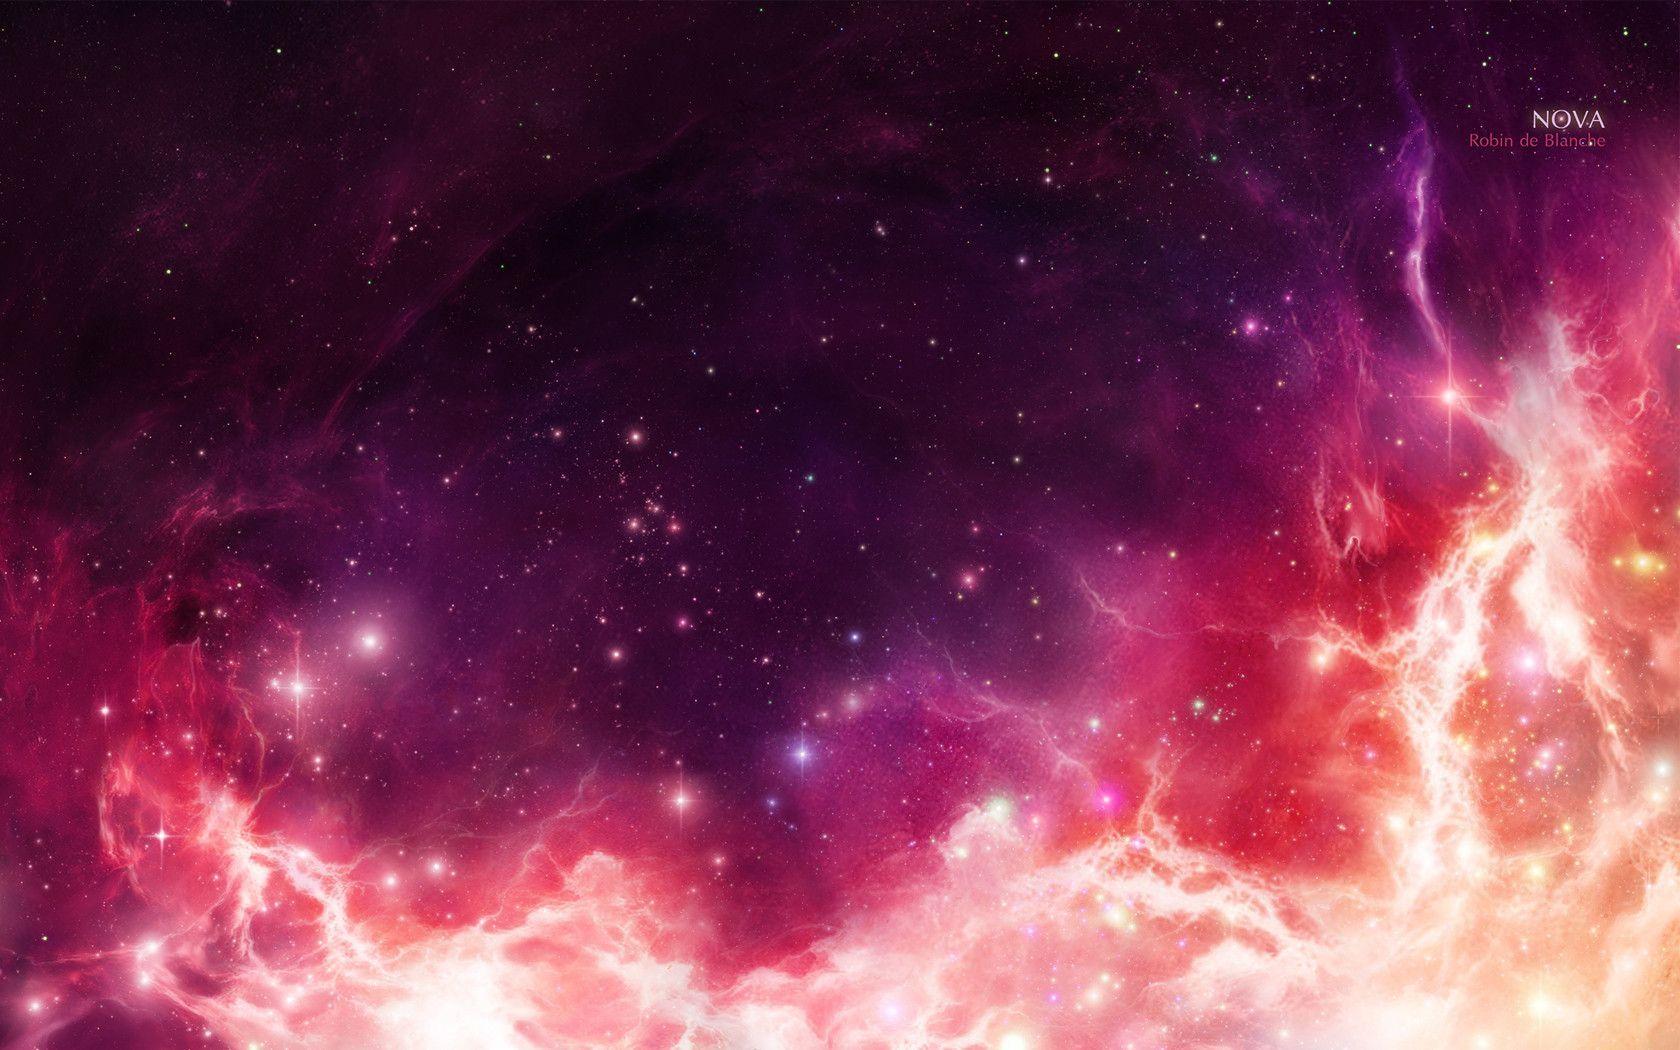 Full HD Wallpaper + Space, Nebulae, Pink, Stars, by Robin de Blanche